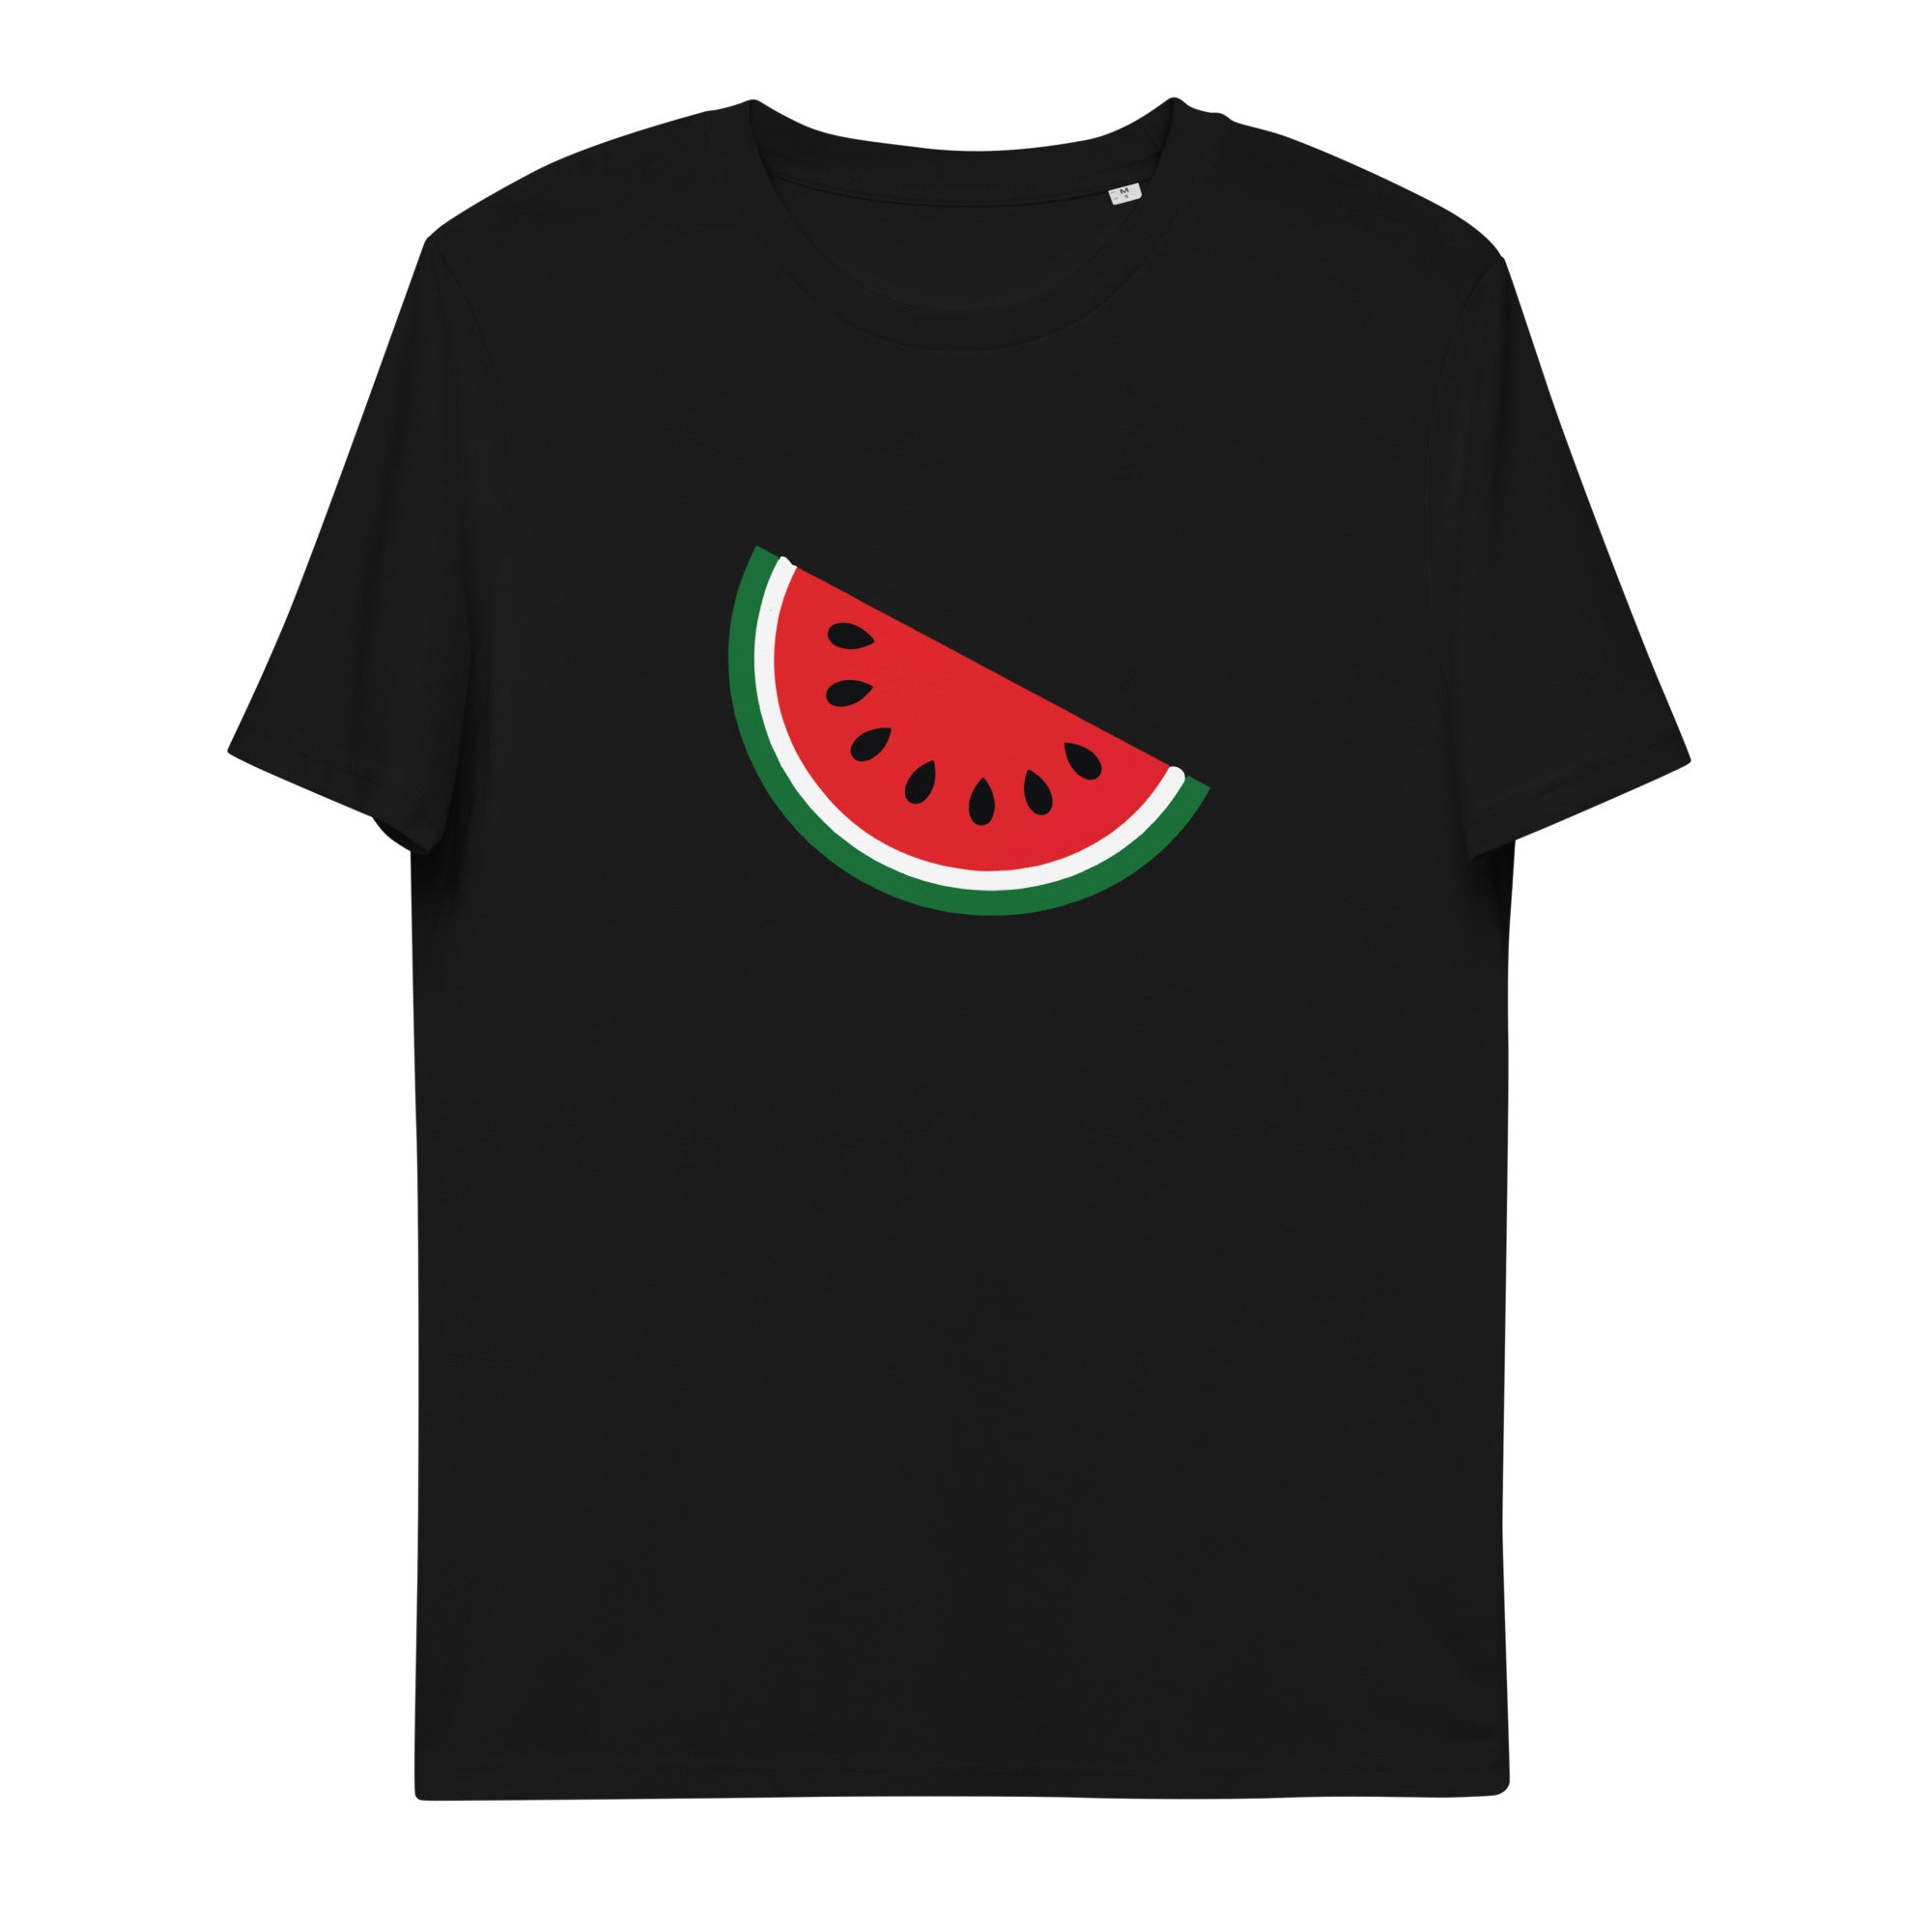 Watermelon t-shirt